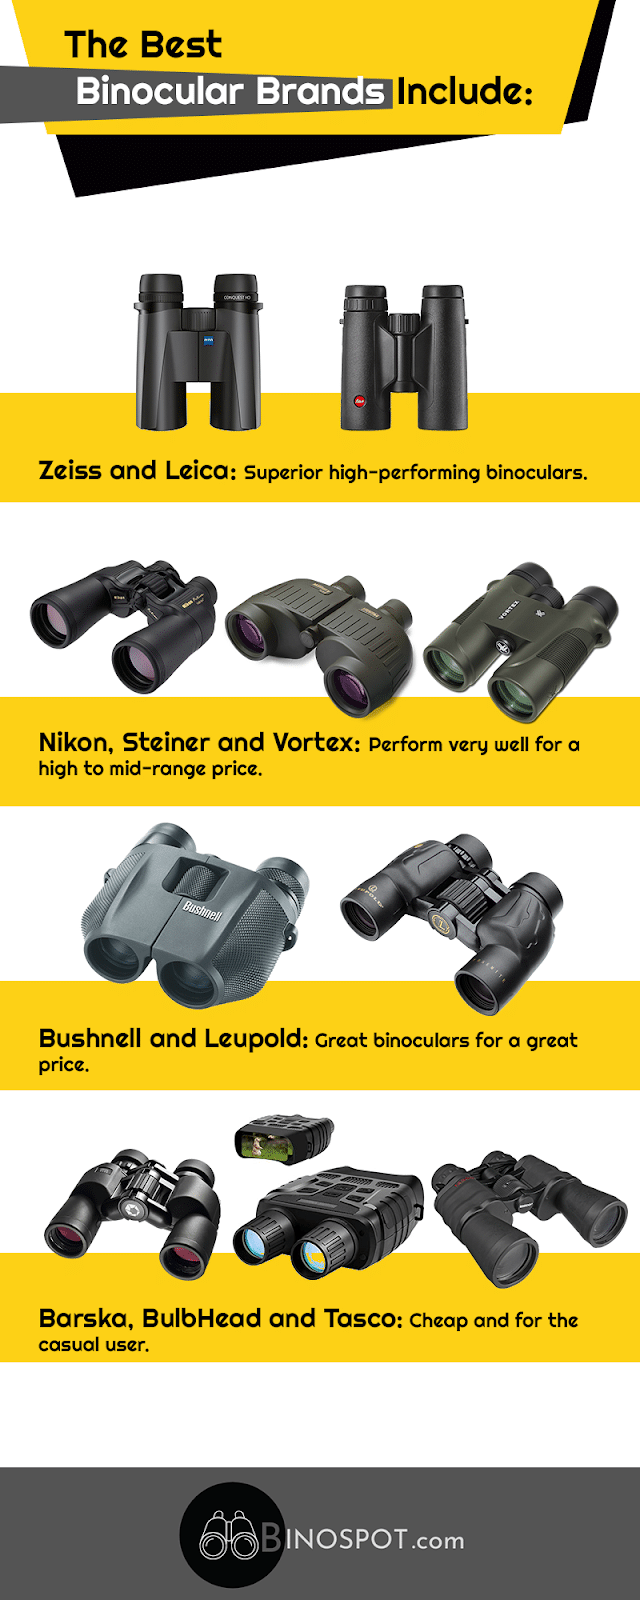 Best Binoculars by Brand infographic